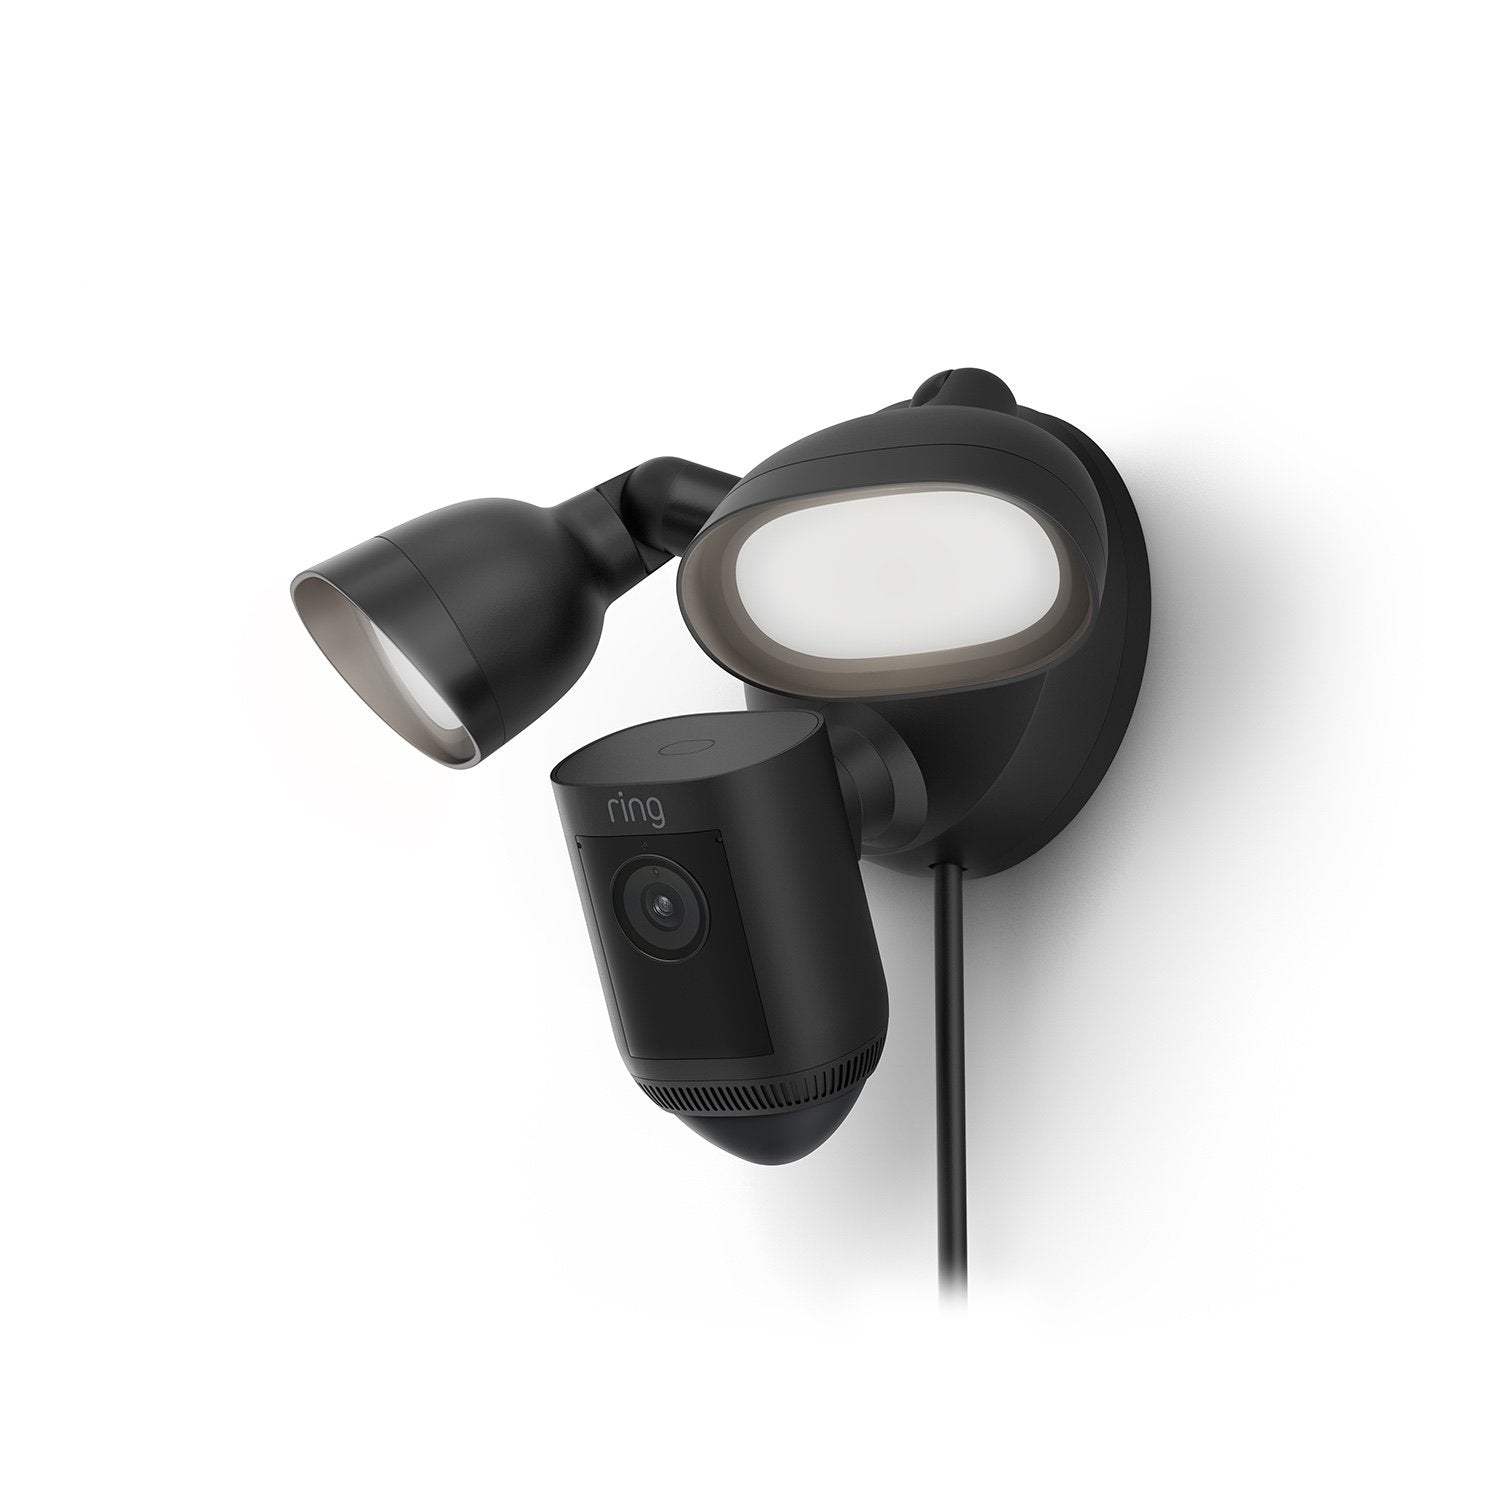 Floodlight Cam Pro (Plug-In) - Black